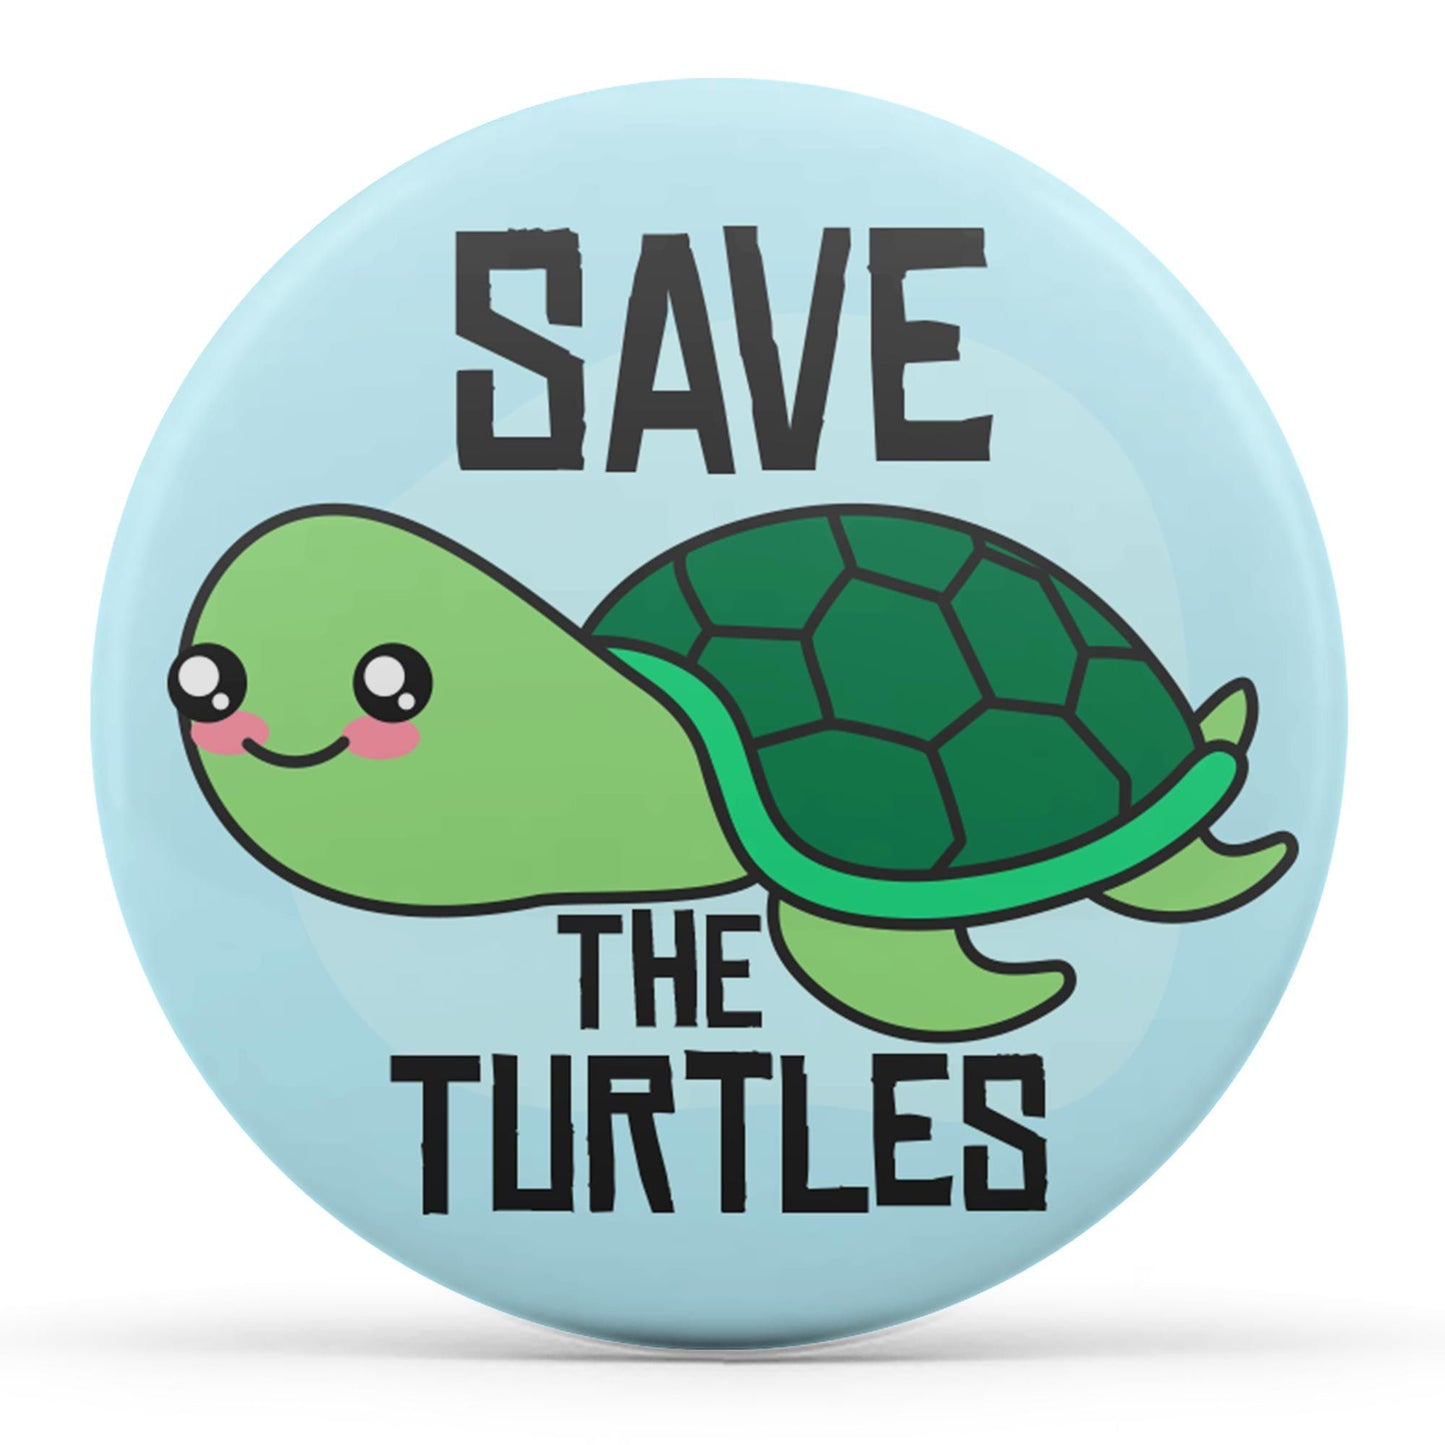 Save The Turtles Image